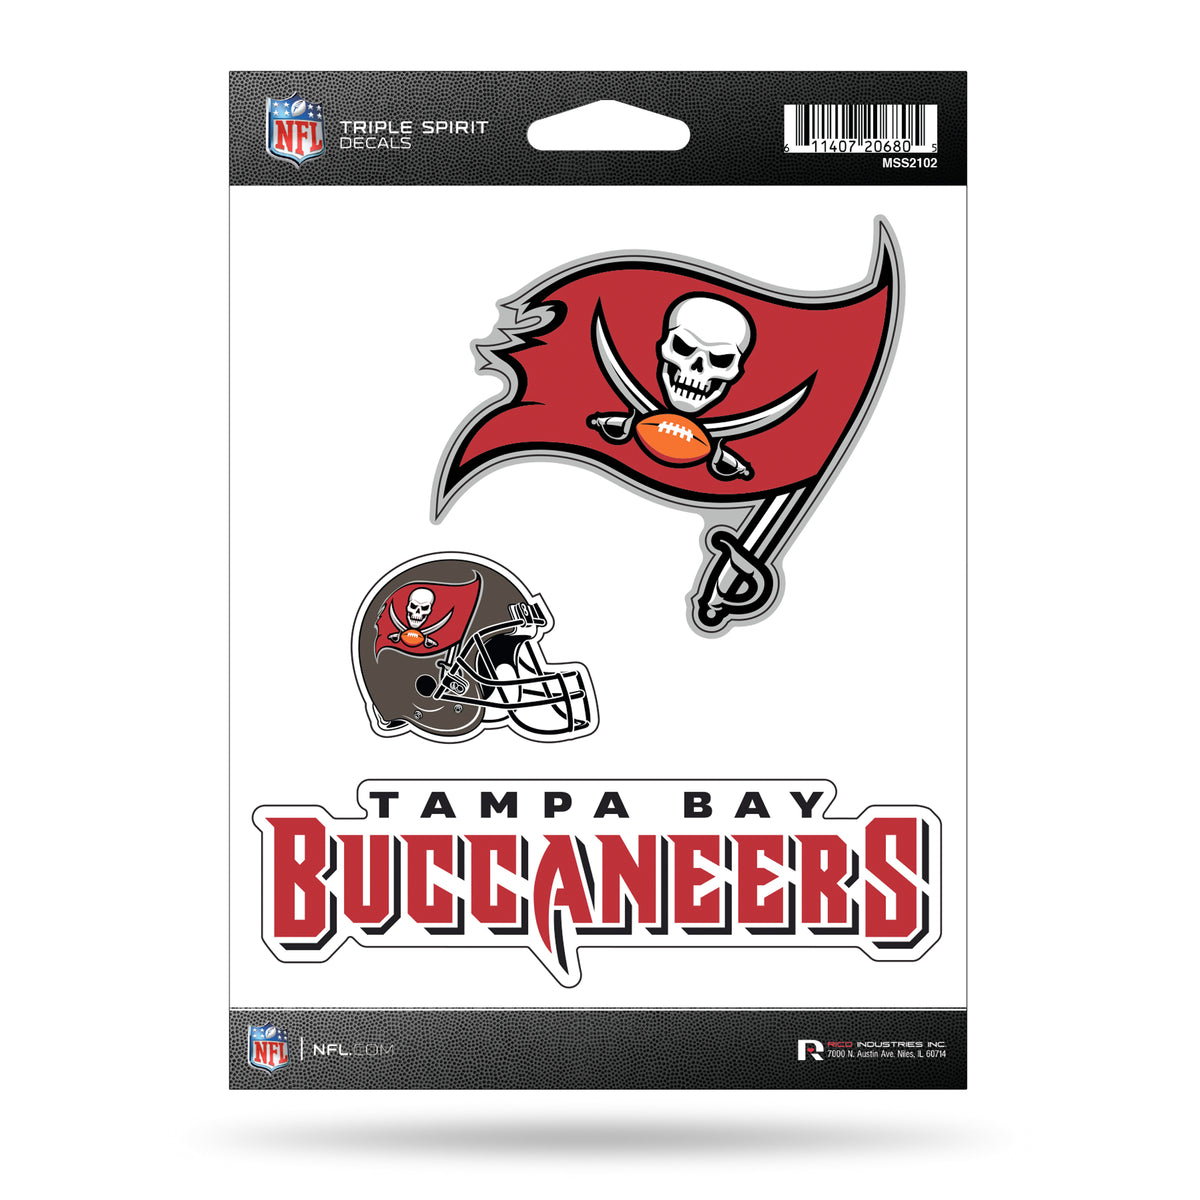 Tampa bay Buccaneers Merchandise - N1Fan Store